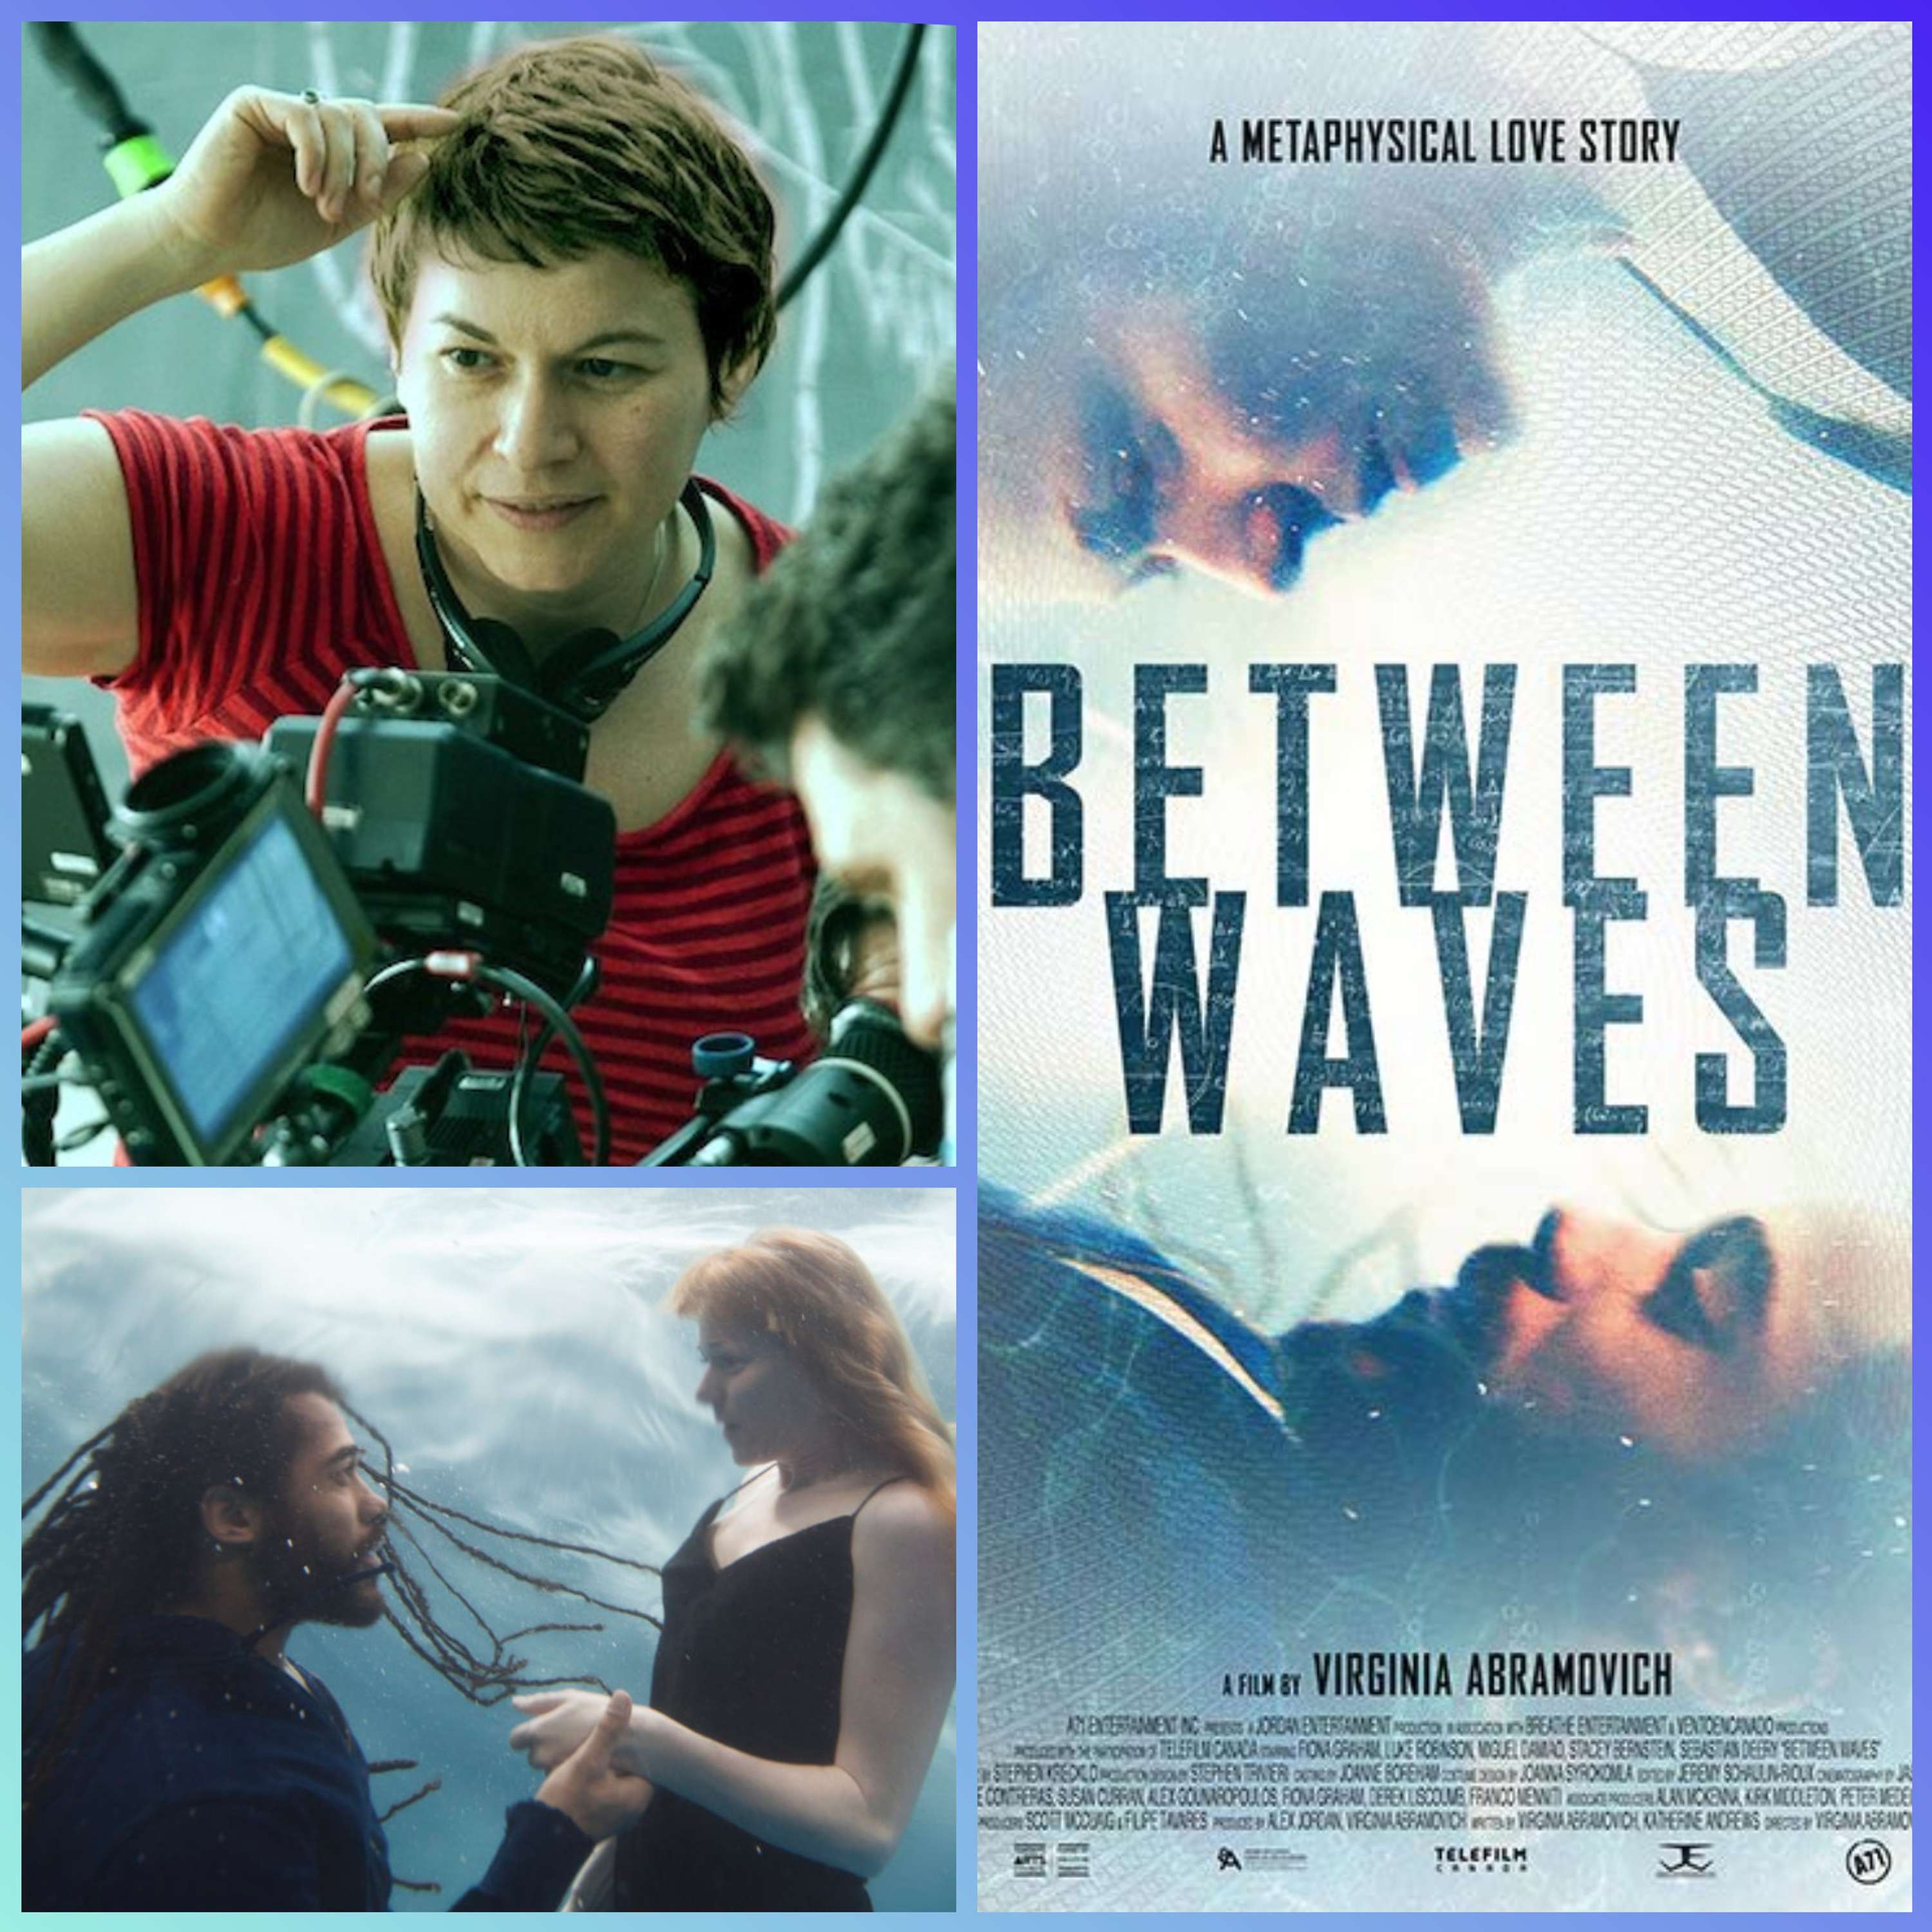 BETWEEN WAVES - Virginia Abramovich Interview - Broad View International Film Festival